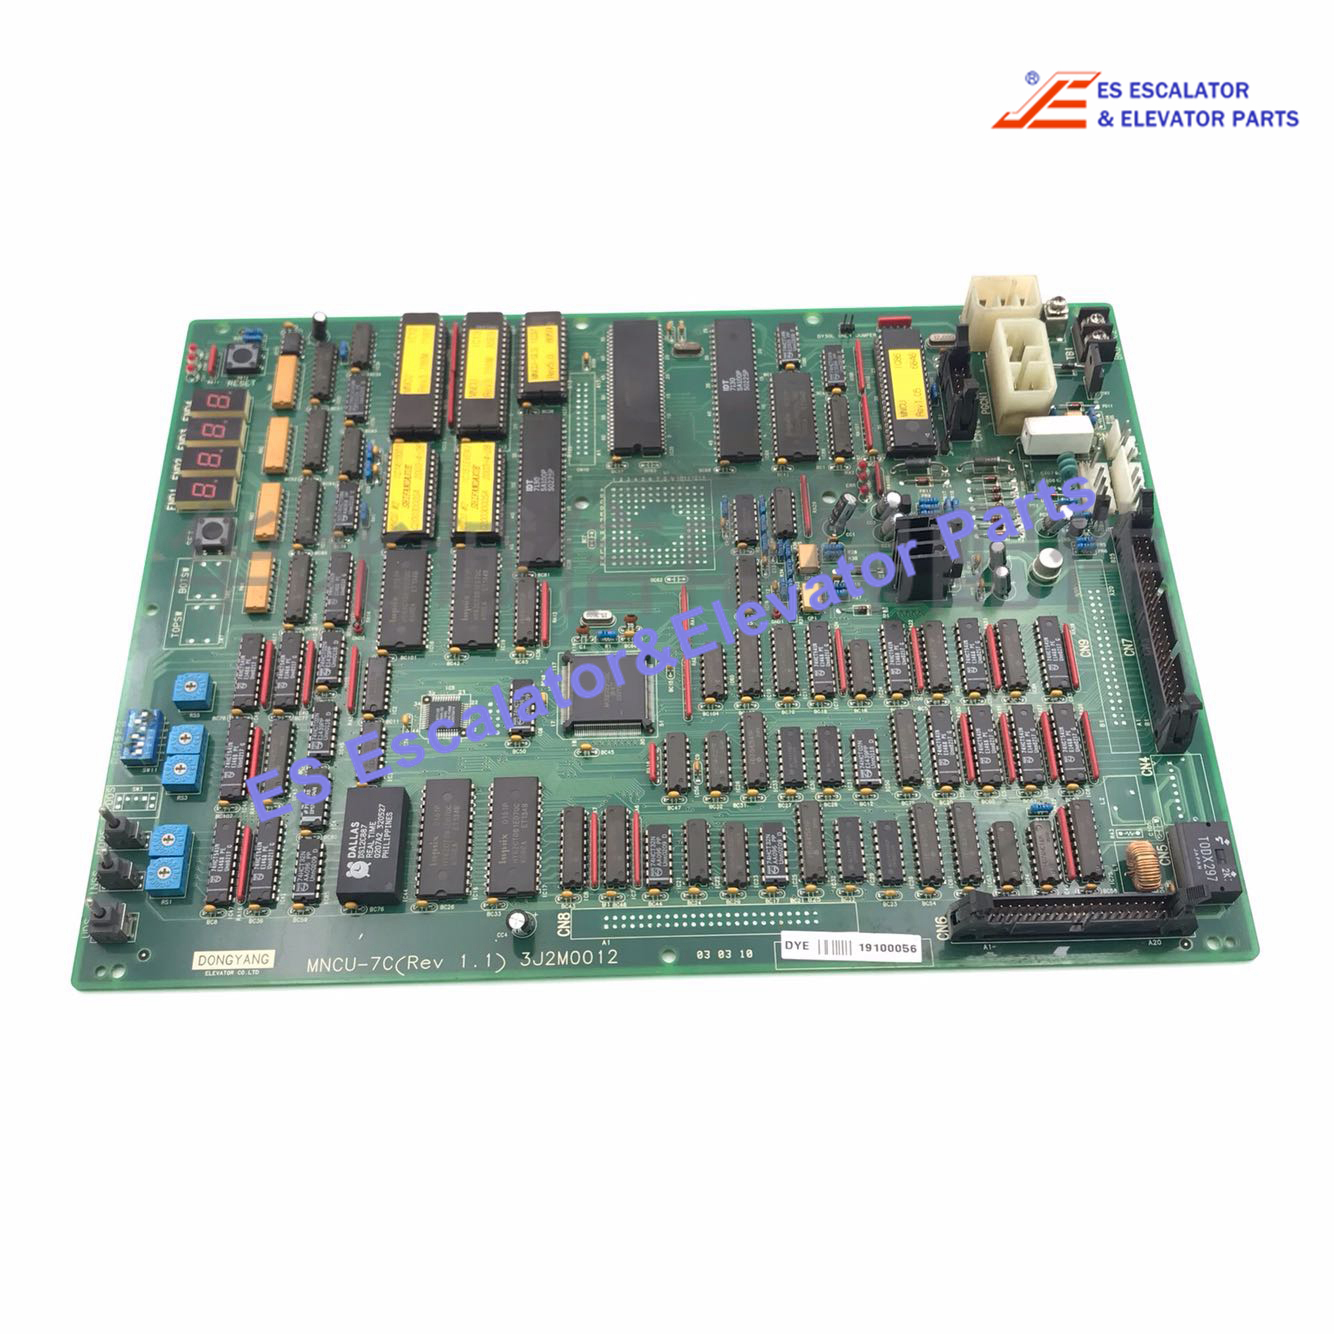 MNCU-7C（REV1.1)3J2M0012 Elevator Circuit board   Use For Thyssen